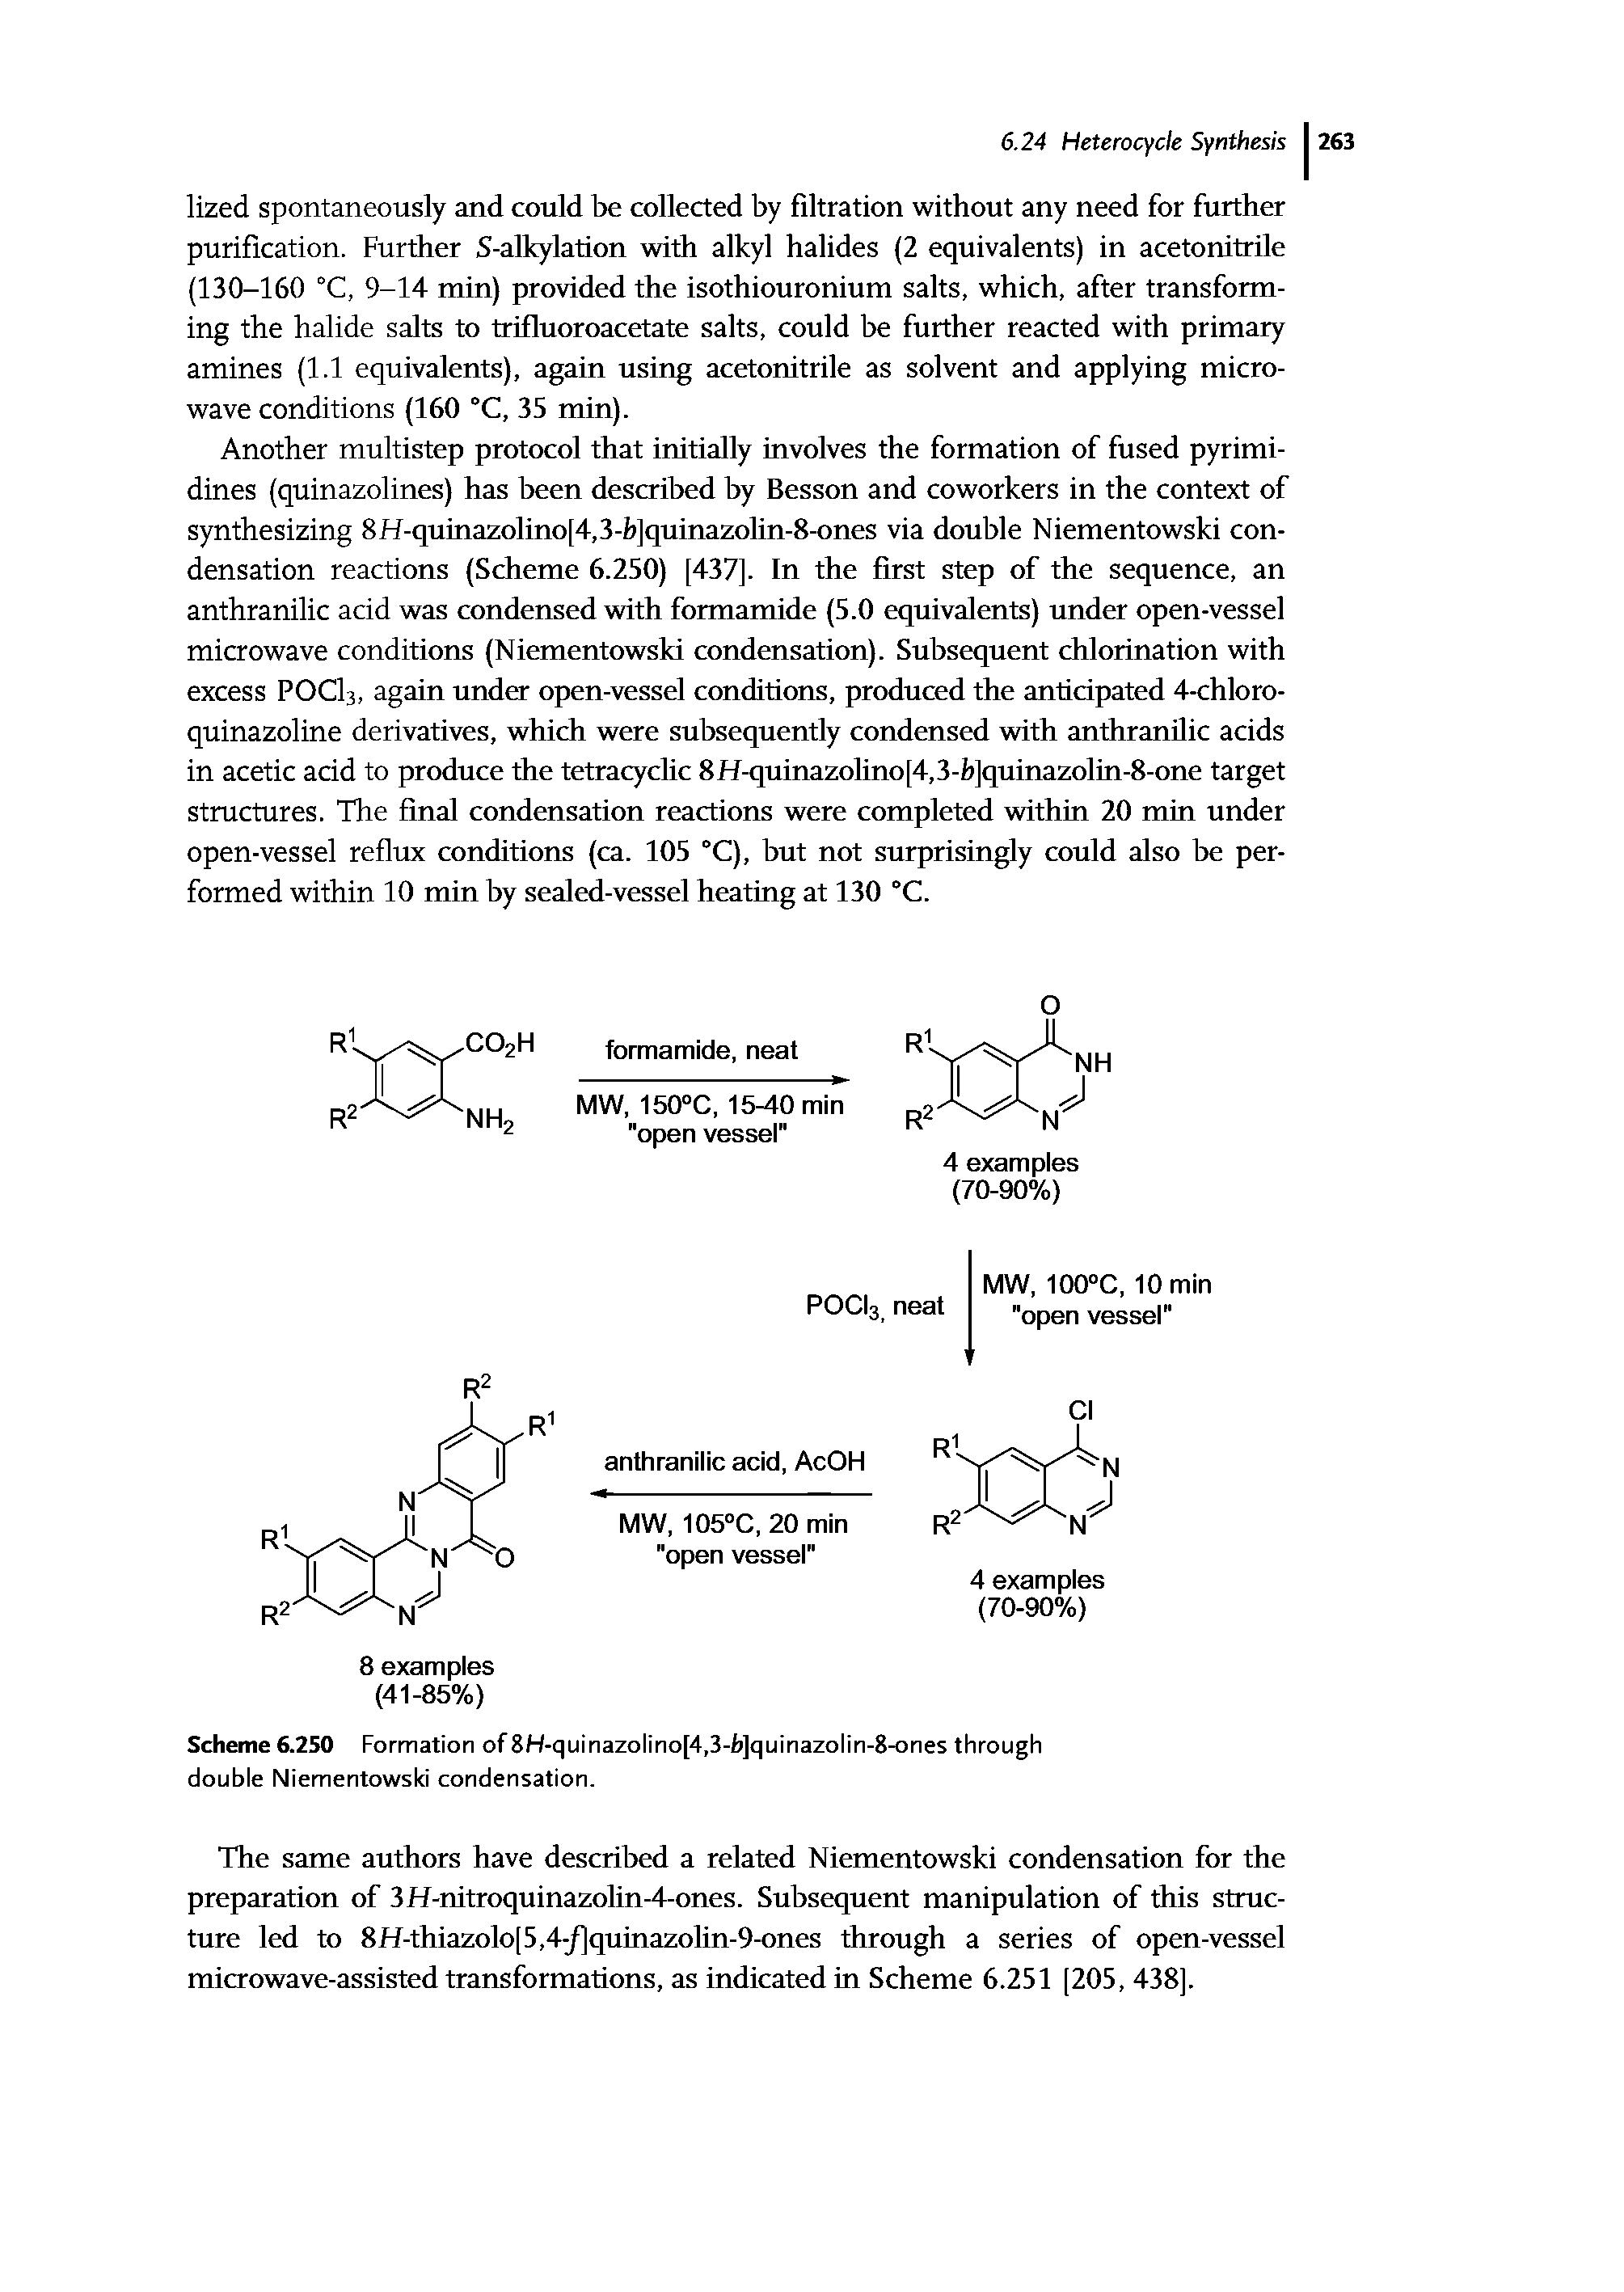 Scheme 6.250 Formation of 8H-quinazolino[4,3-b]quinazolin-8-ones through double Niementowski condensation.